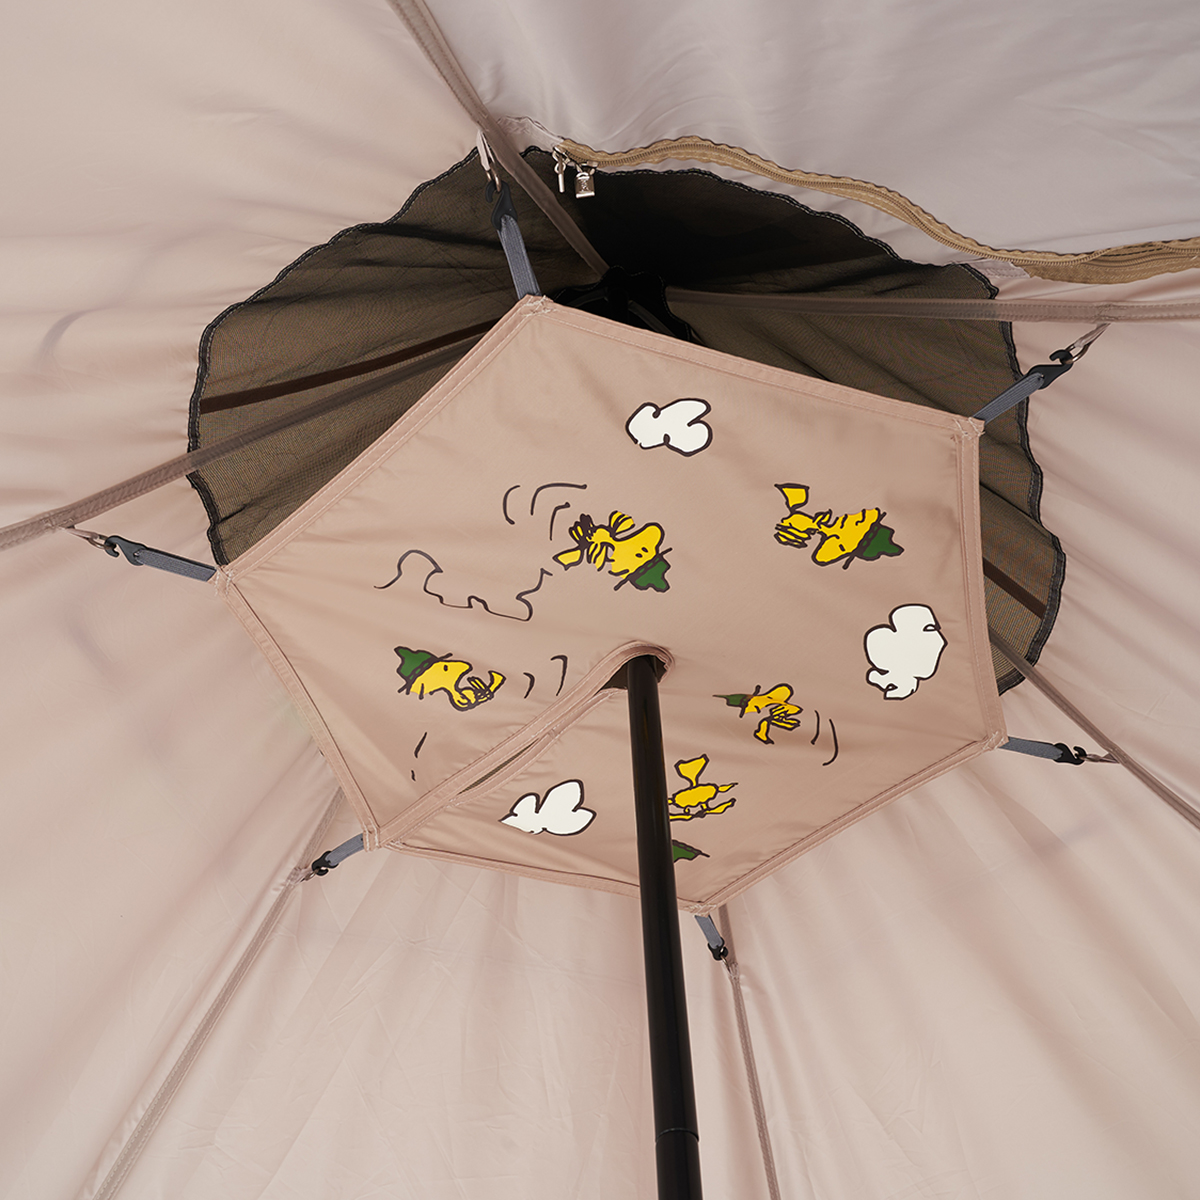 Snoopy Tepee テント ギア テント ワンポール 製品情報 ロゴスショップ公式オンライン